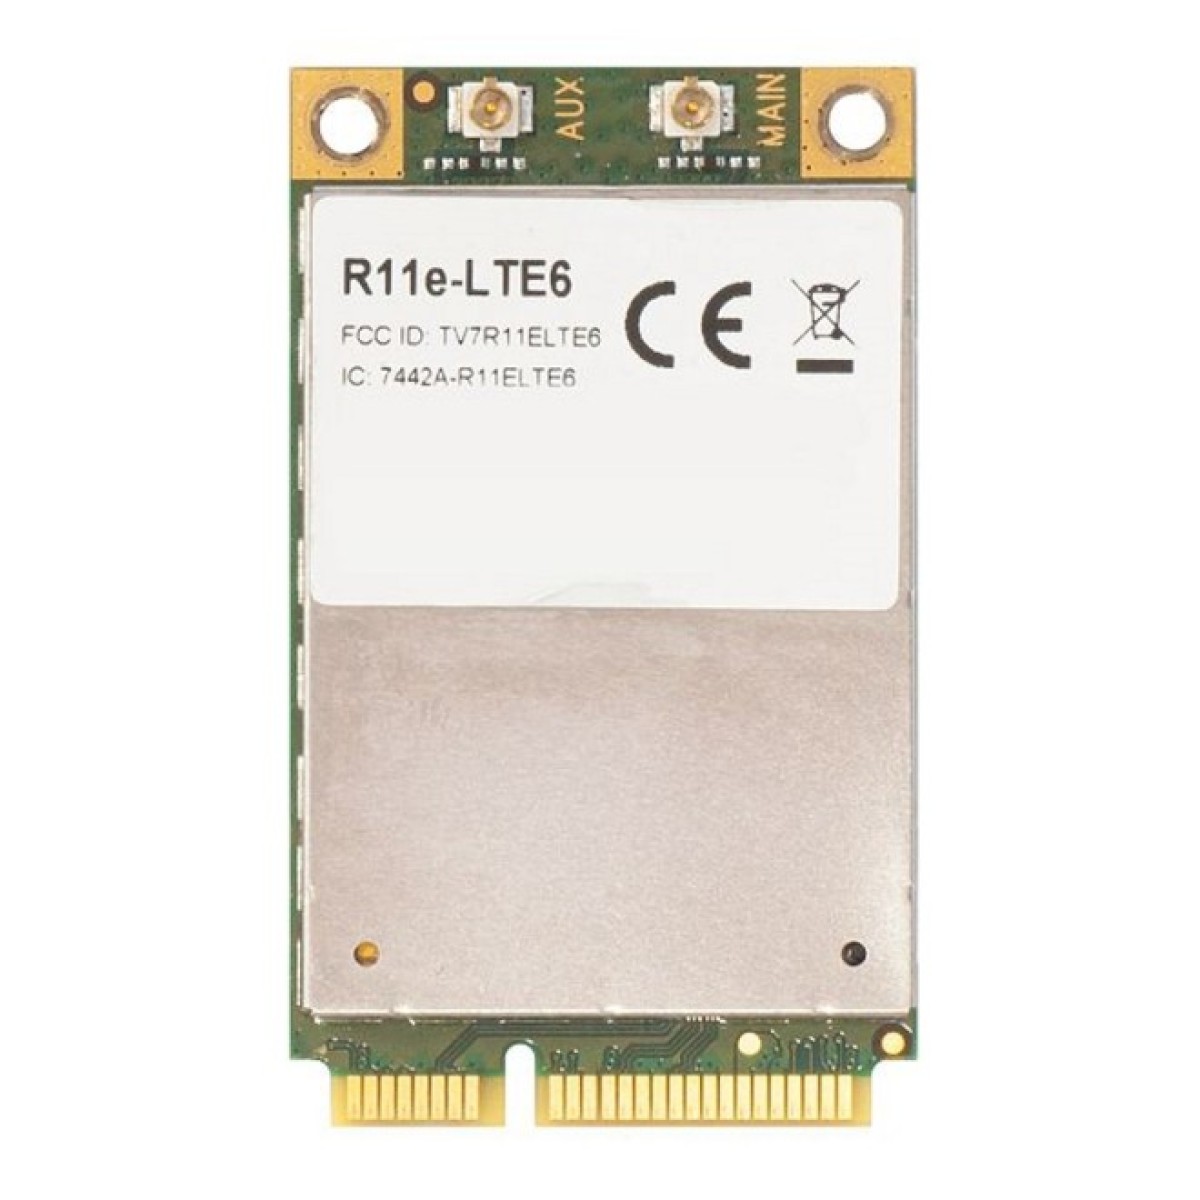 LTE модем (miniPCI-e карта) MikroTik R11e-LTE6 256_256.jpg